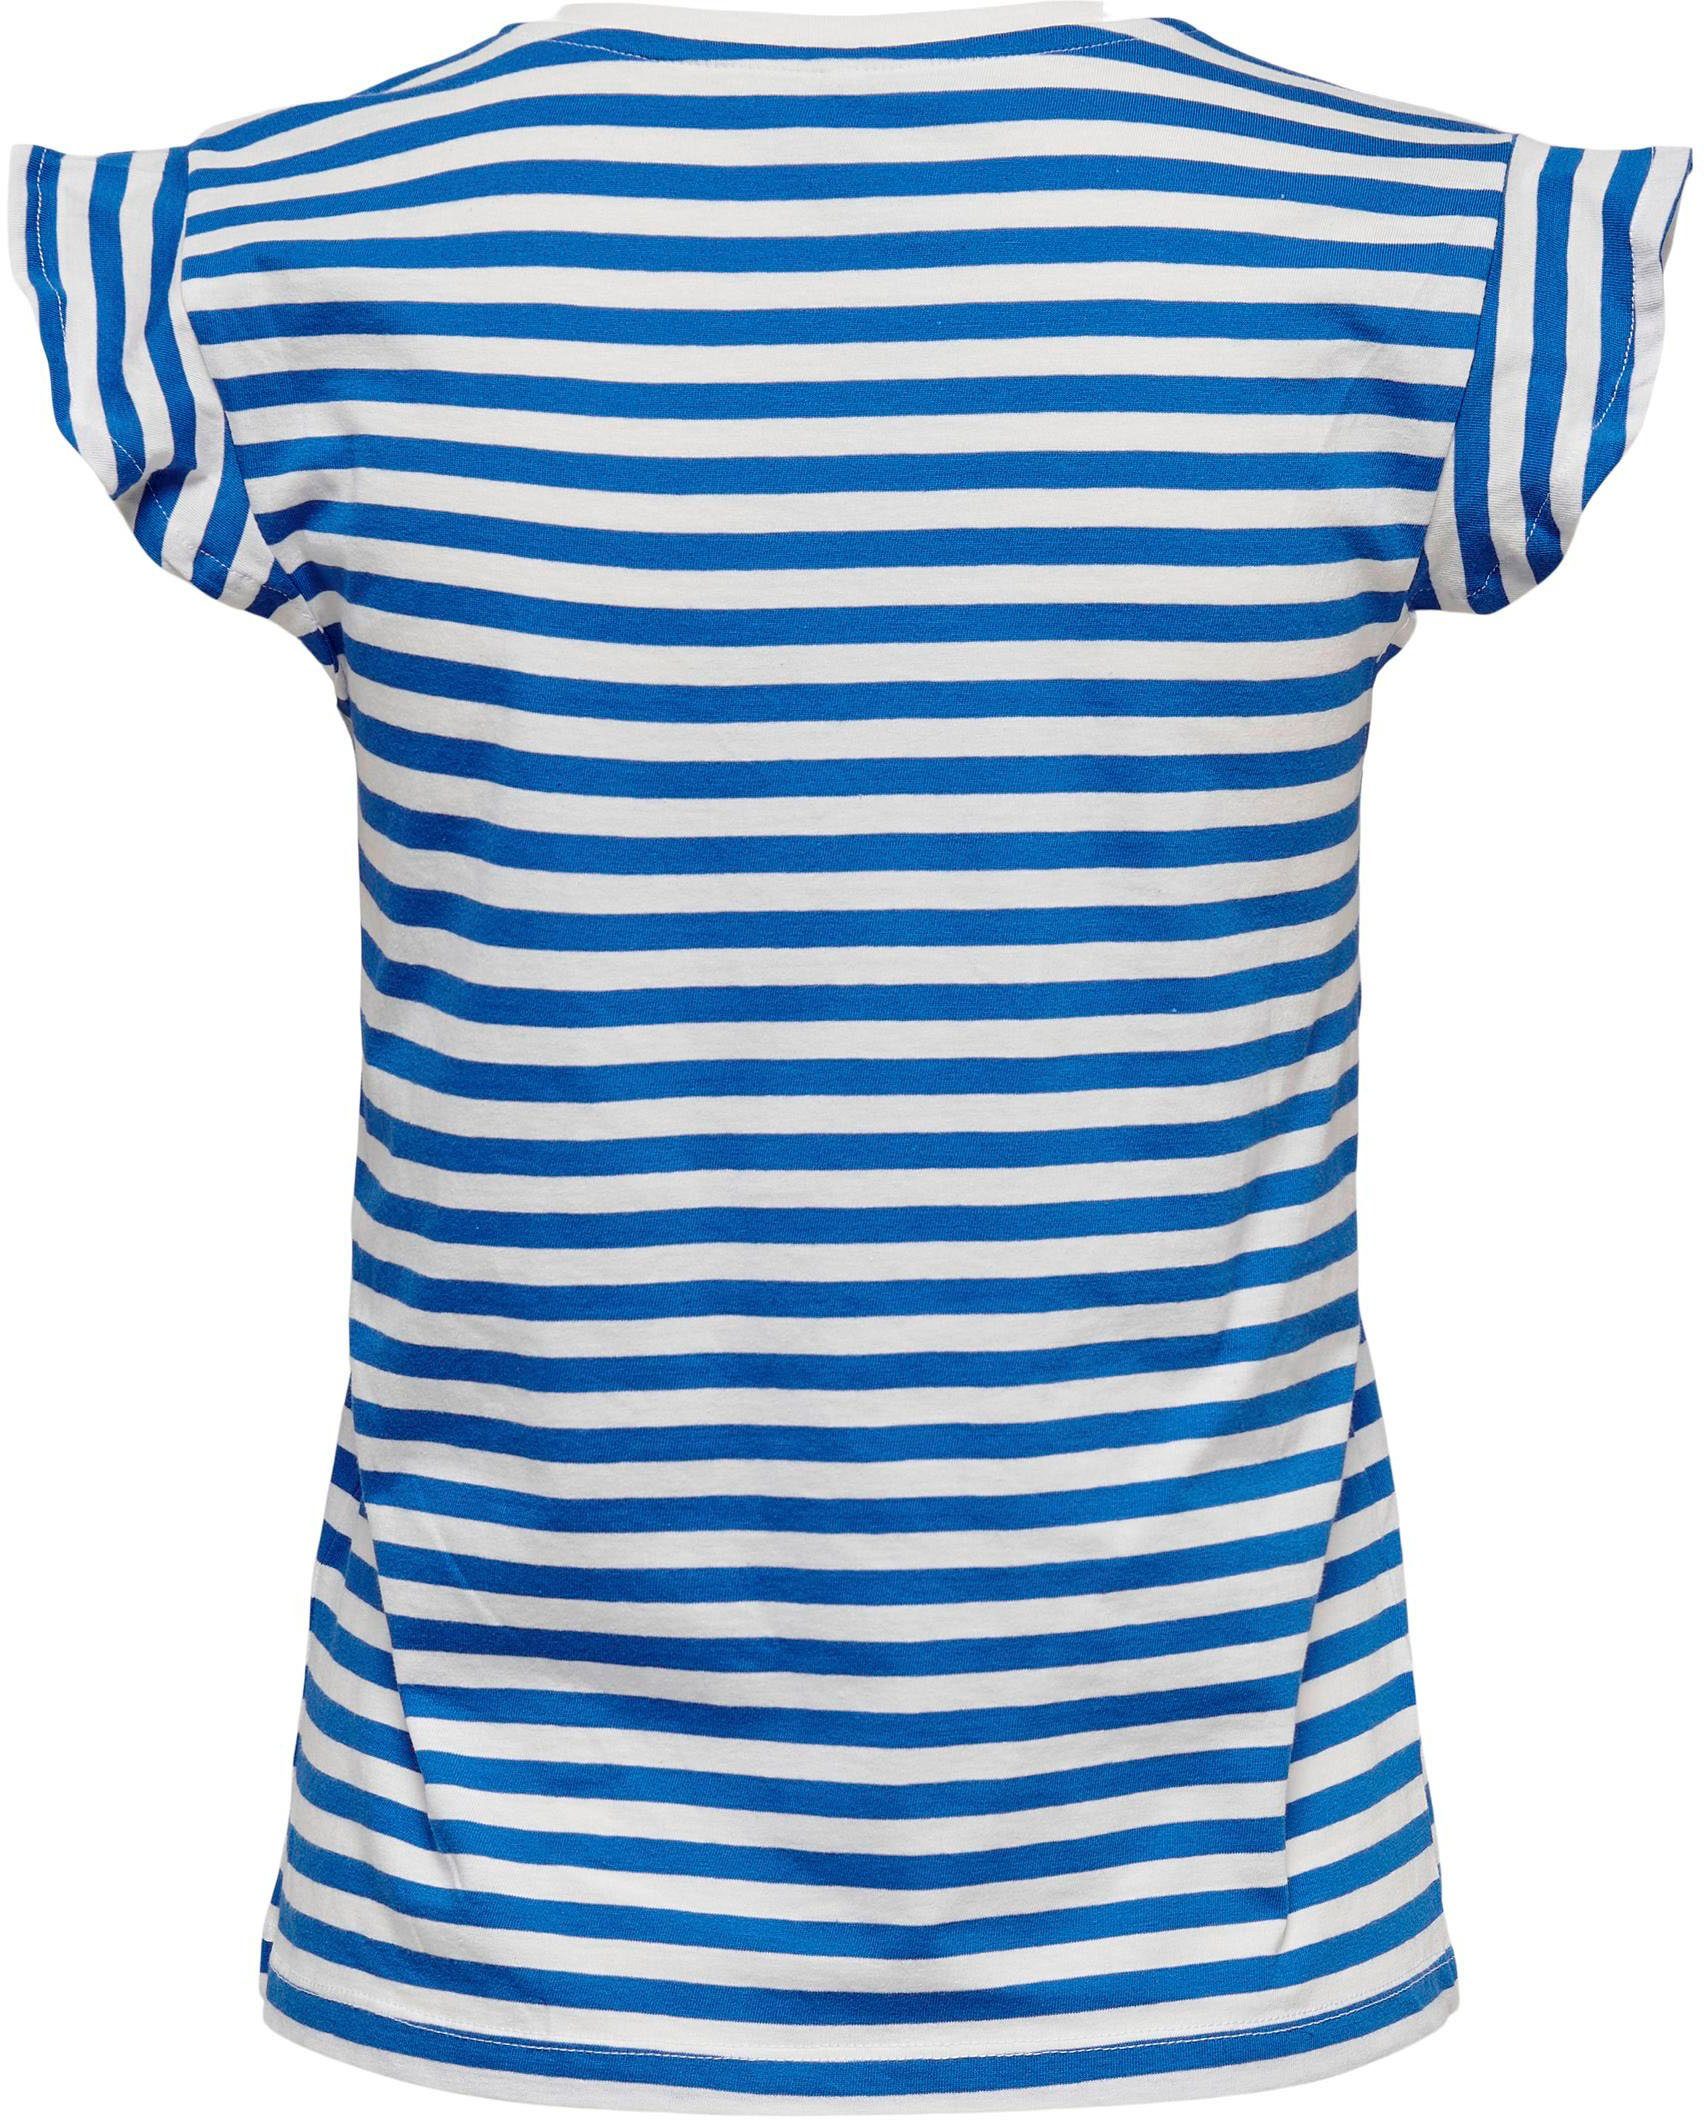 ONLY V-Shirt ONLMAY S/S FRILL Strong Stripes:Cloud TOP V-NECK Blue dancer